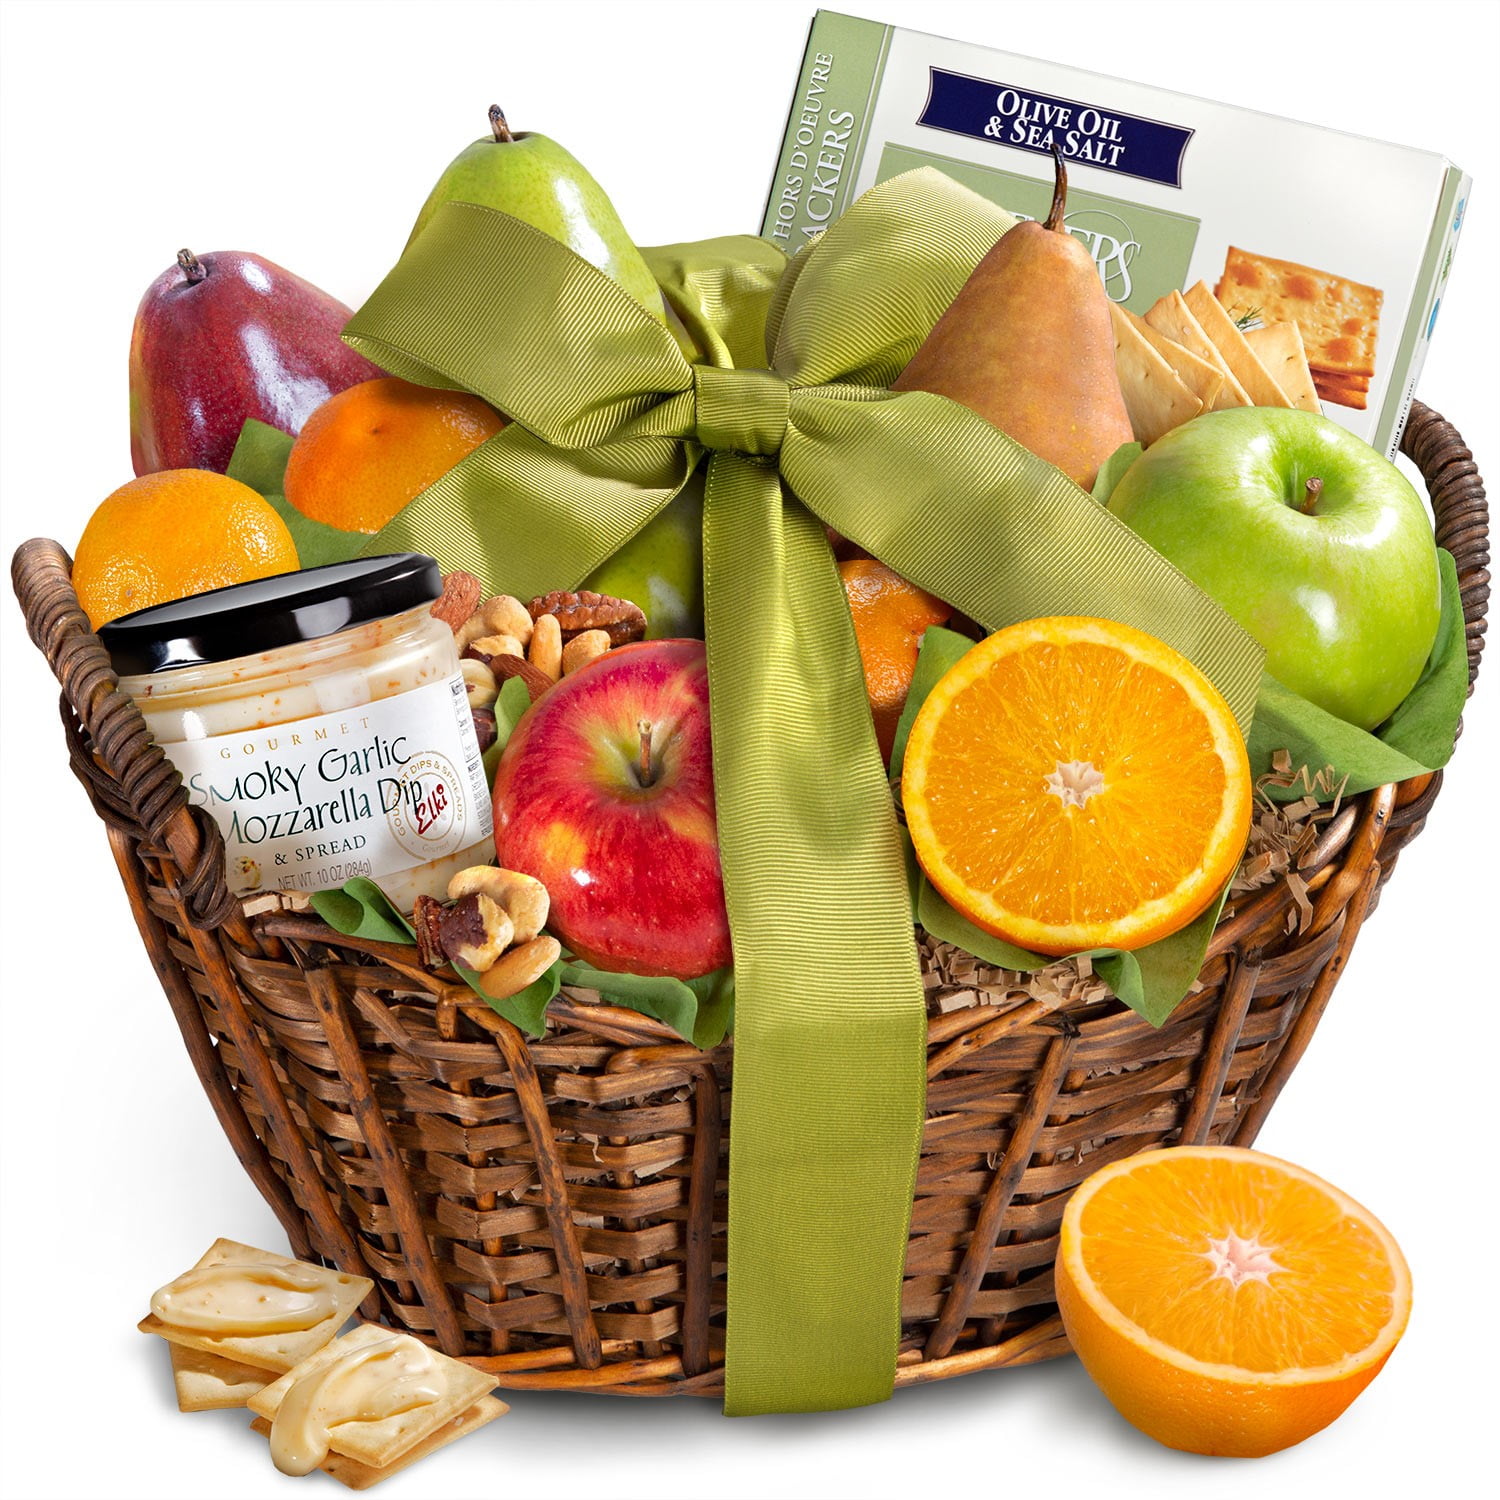 Deluxe Salad Kit Gourmet Gift Basket